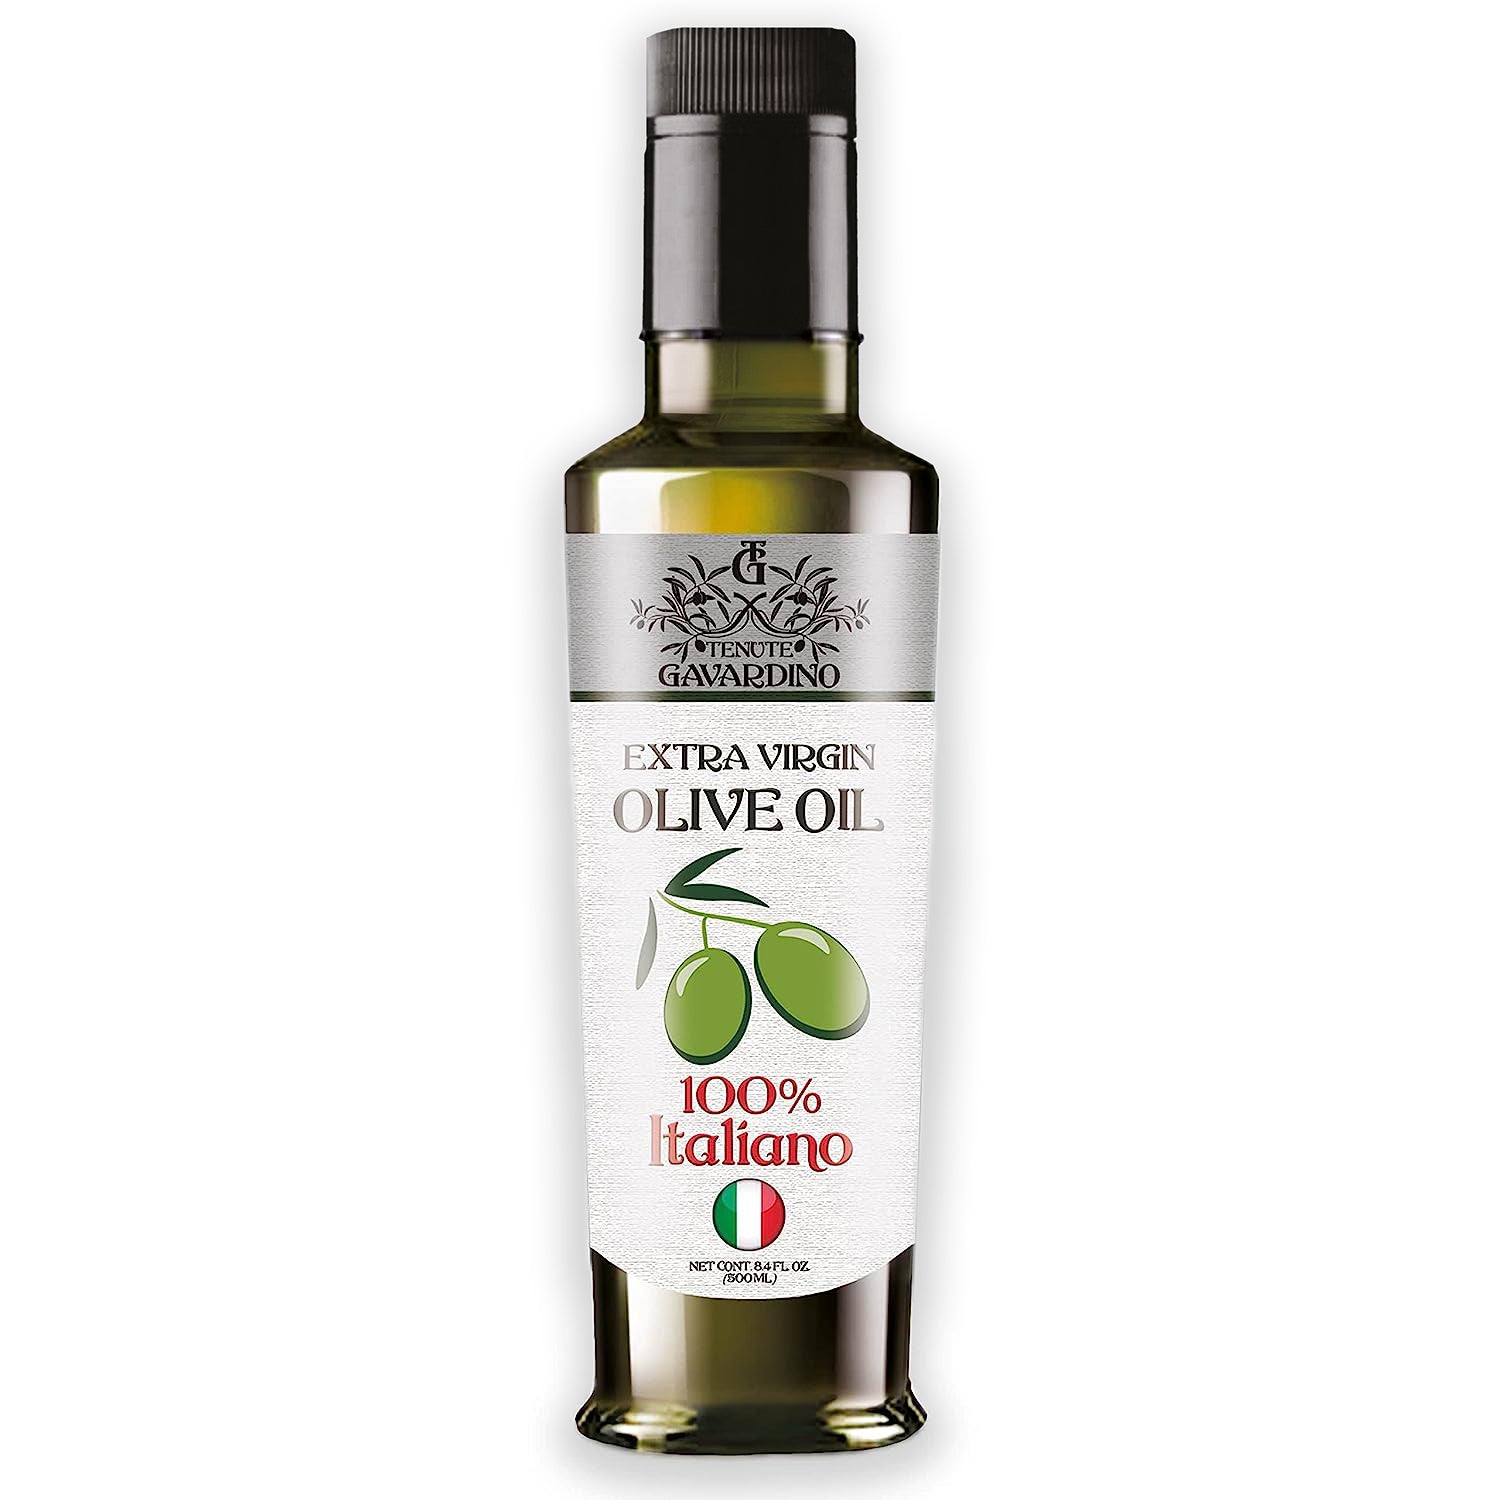 Italian Extra Virgin Olive Oil by Tenute Gavardino